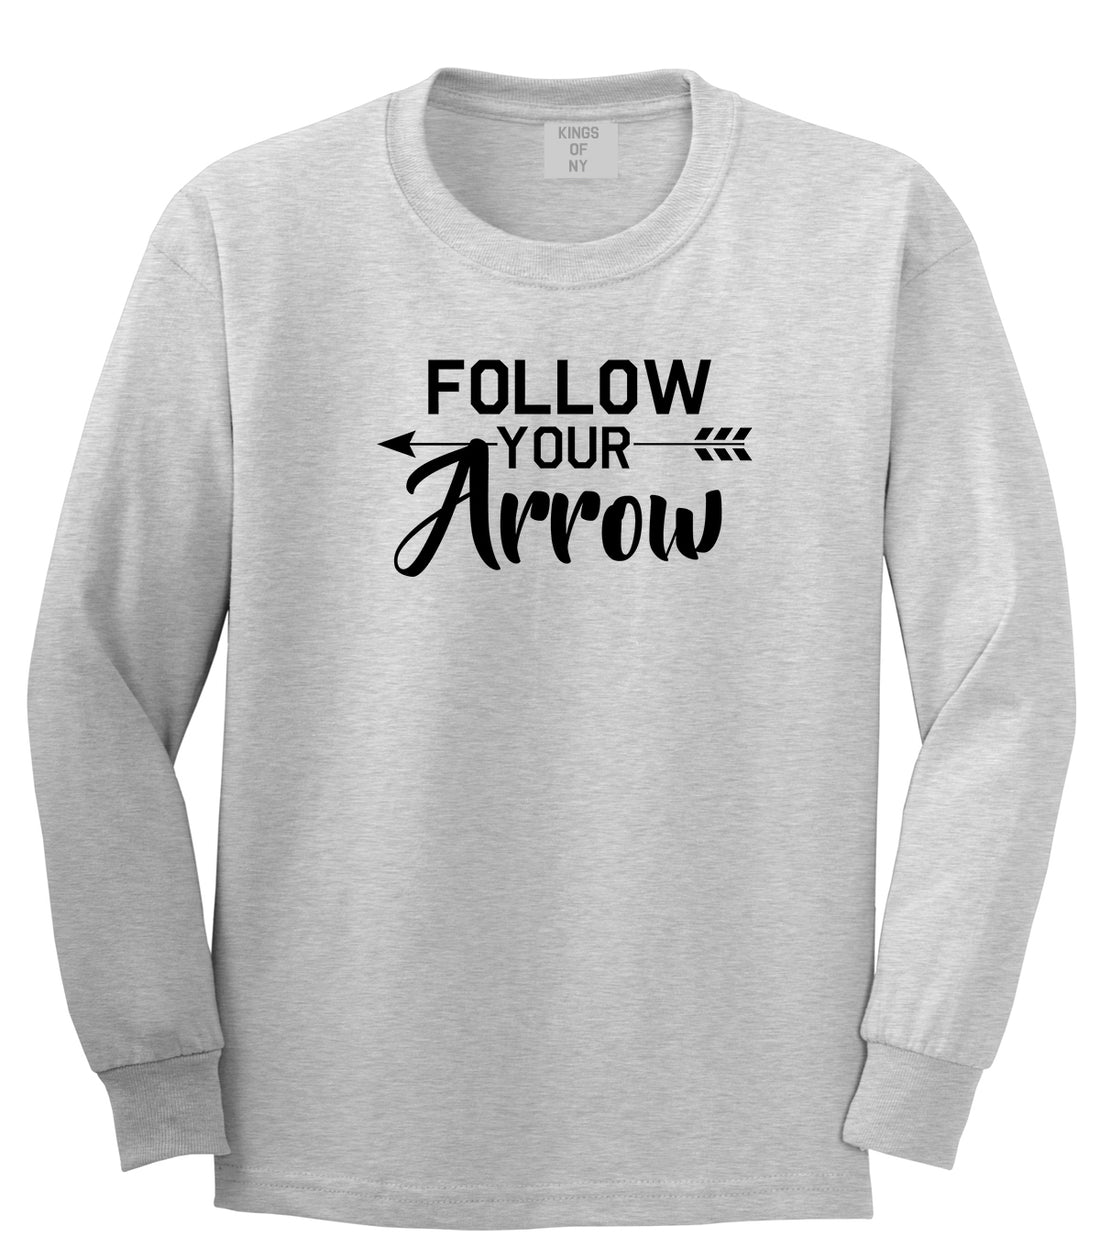 Follow Your Arrow Mens Grey Long Sleeve T-Shirt by KINGS OF NY